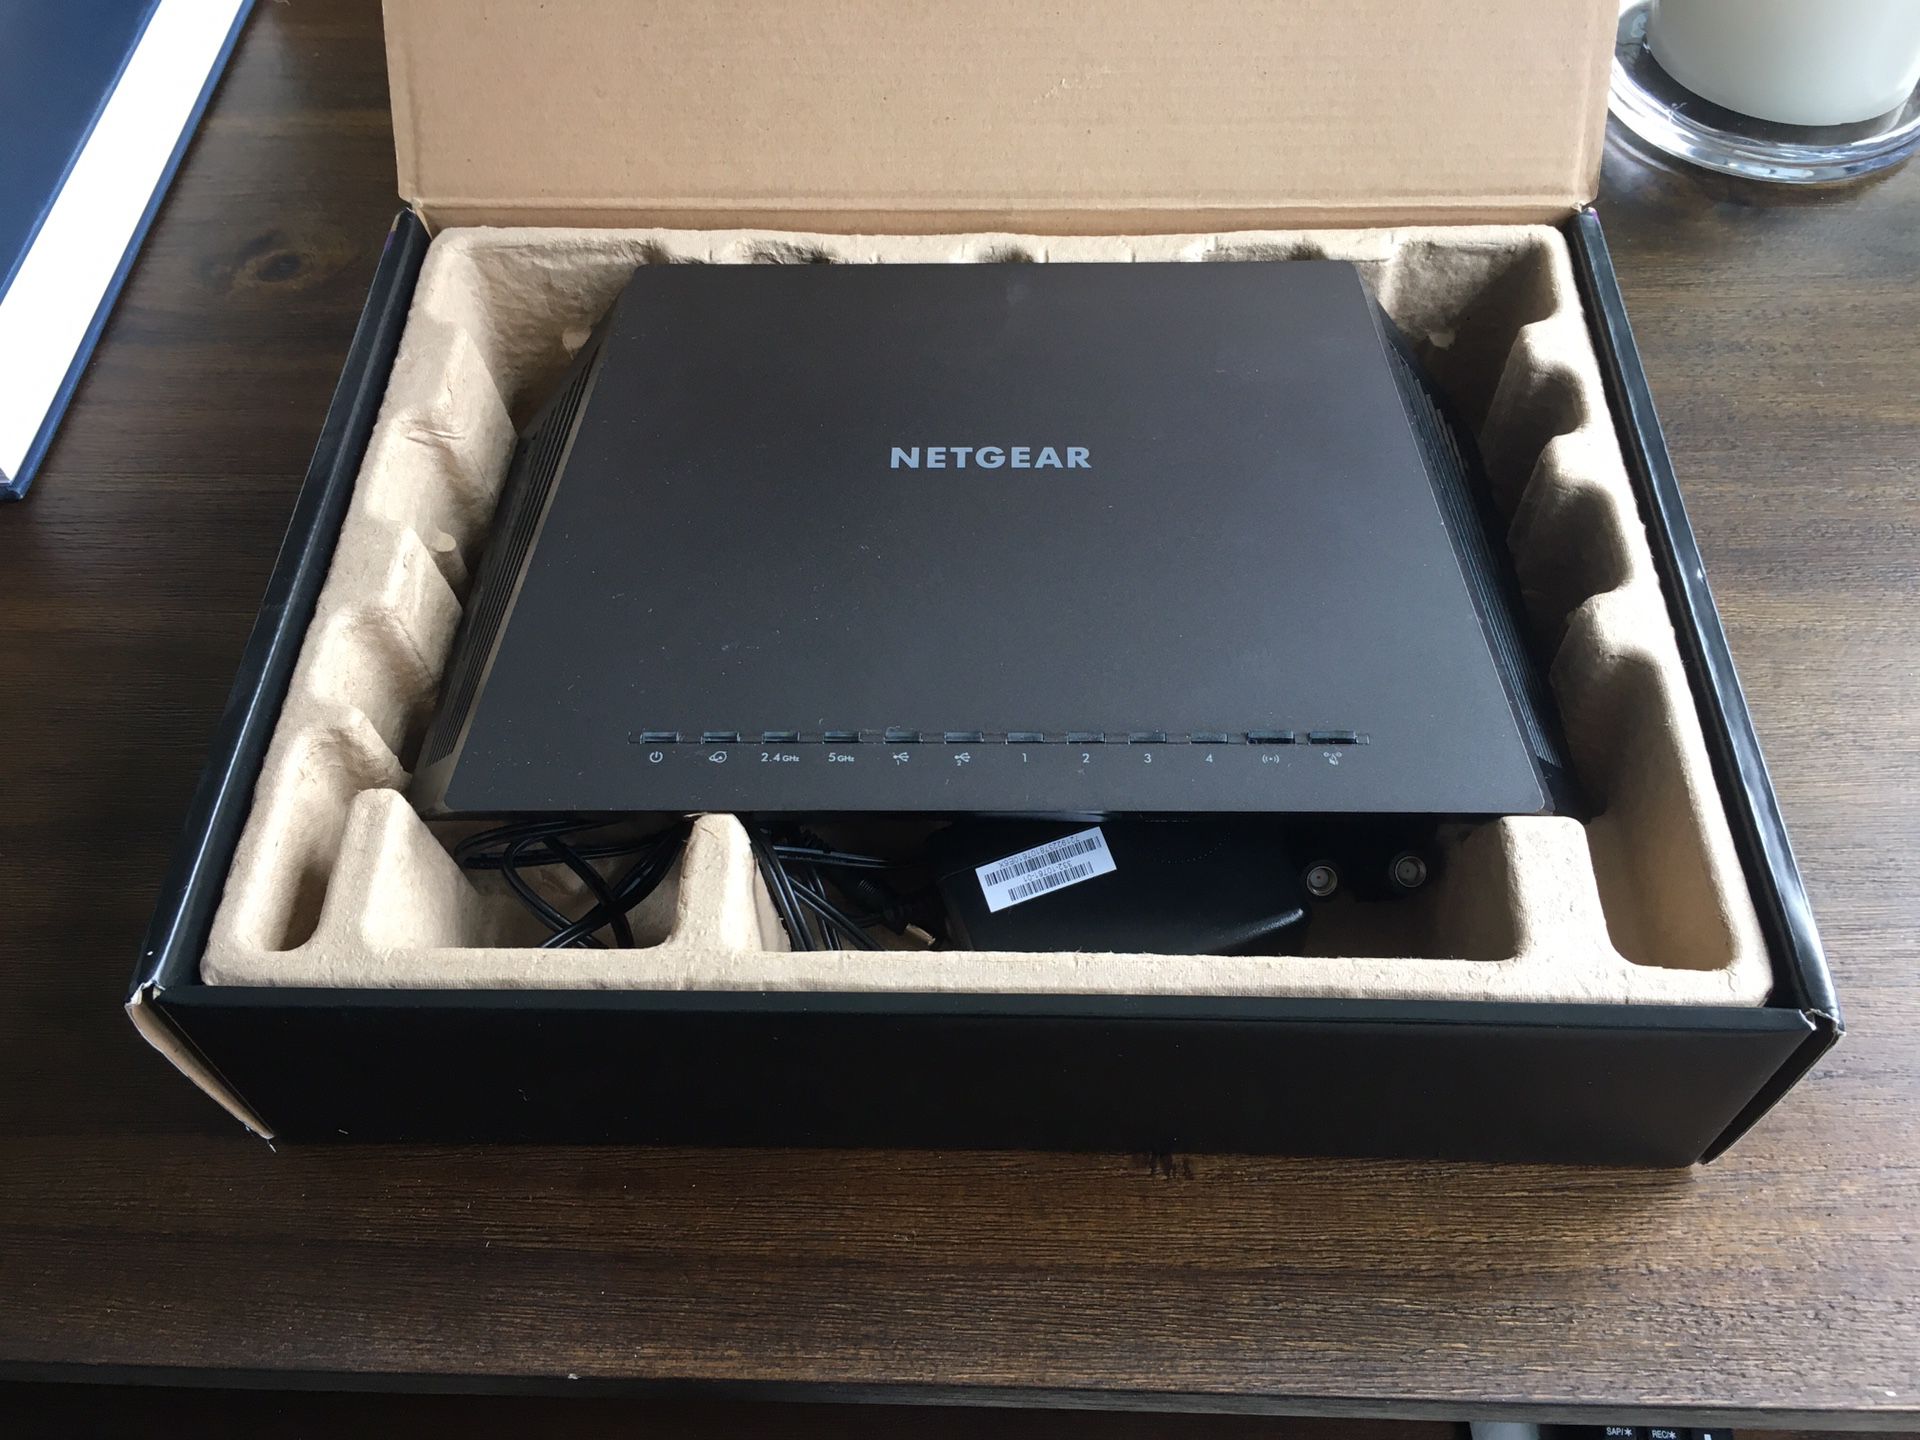 Netgear Nighthawk Ac2300 WiFi Router - Used Once